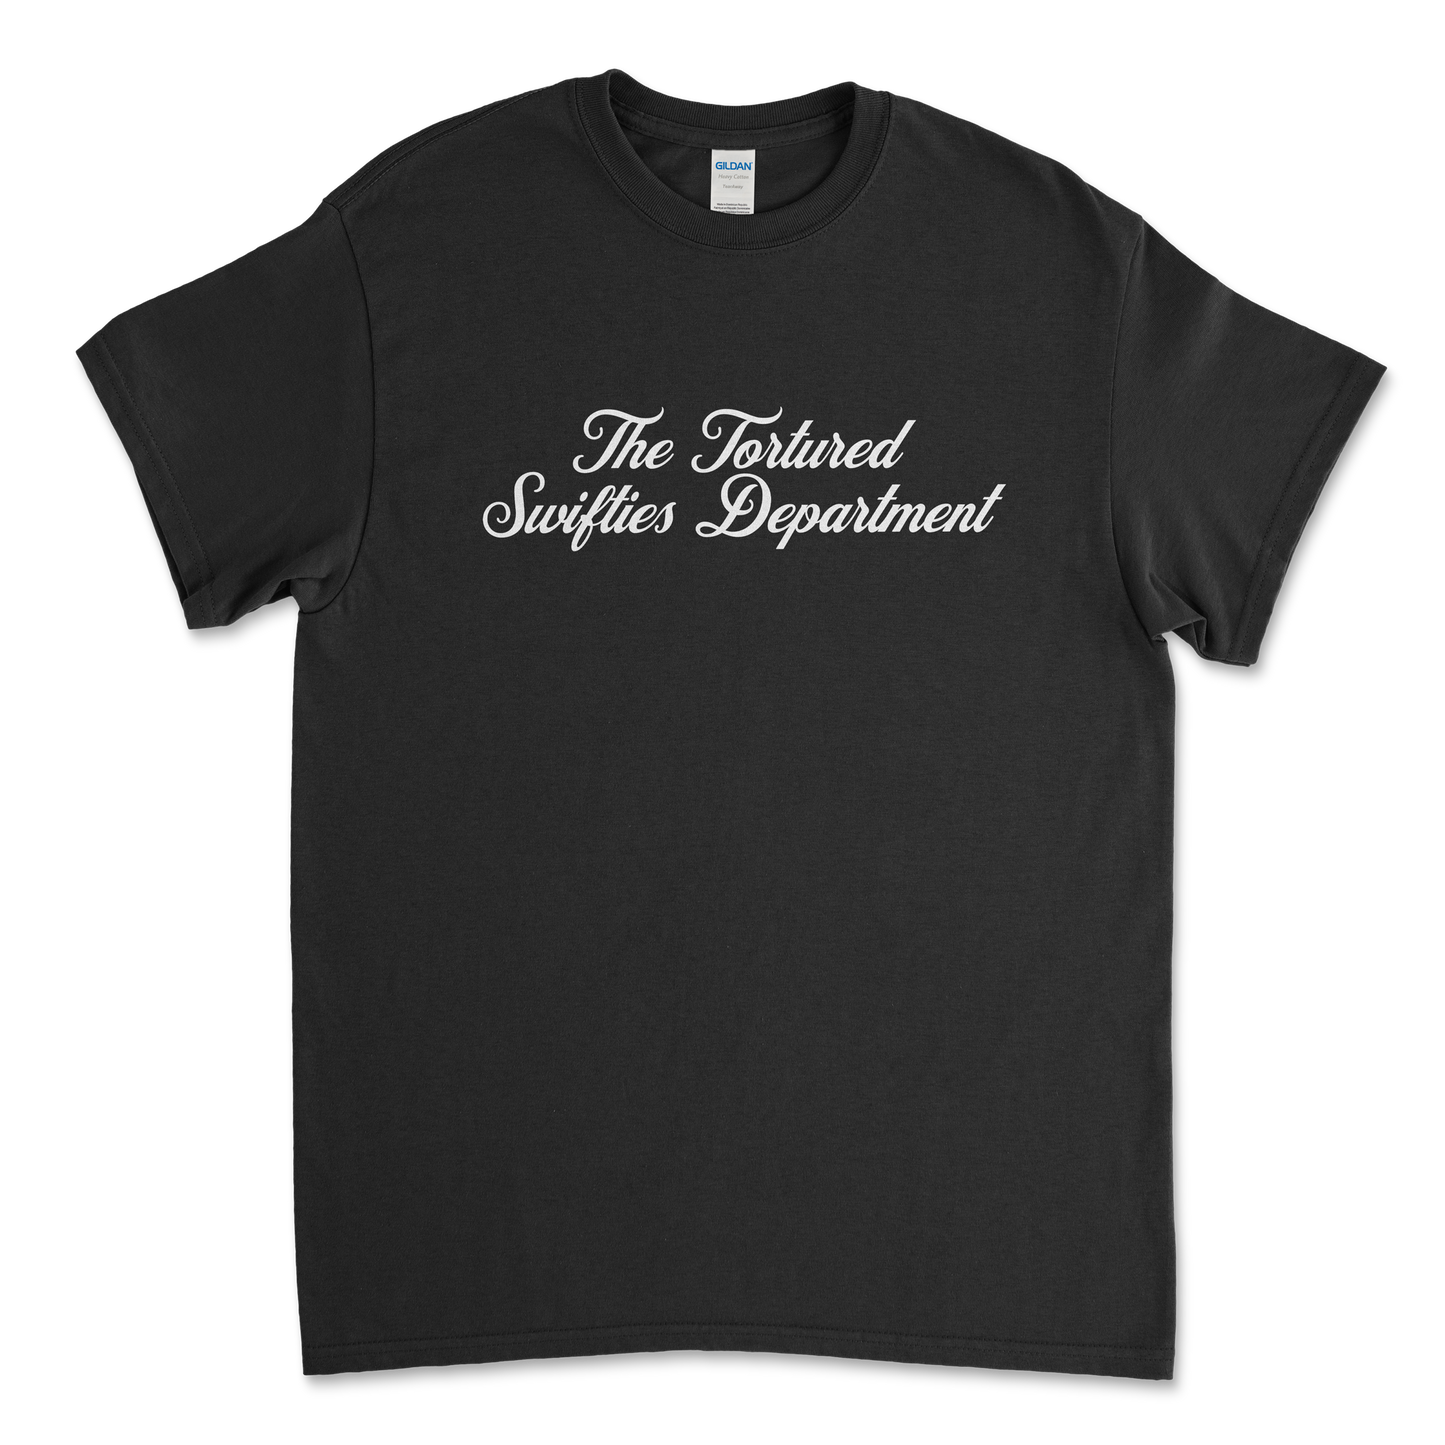 The Tortured Swifties Department T-Shirt